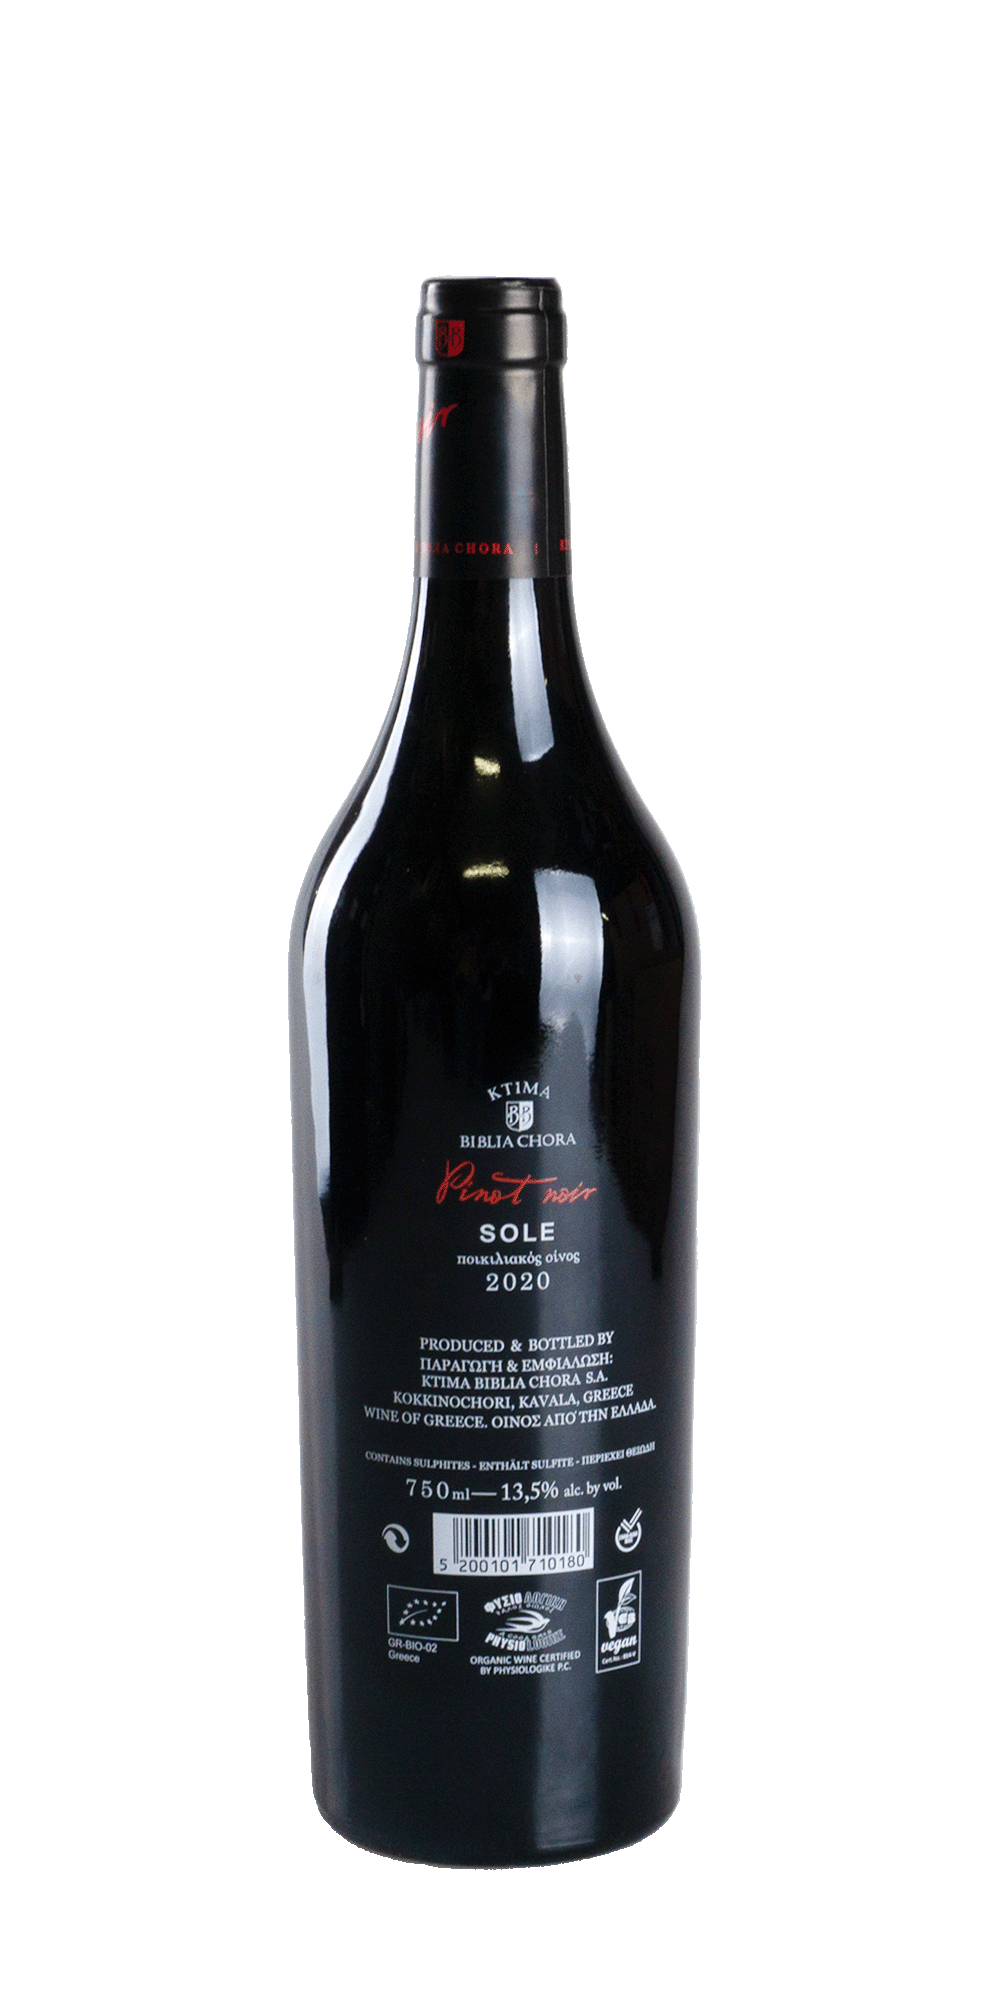 Sole Pinot Noir BIO 2020 - Biblia Chora Estate